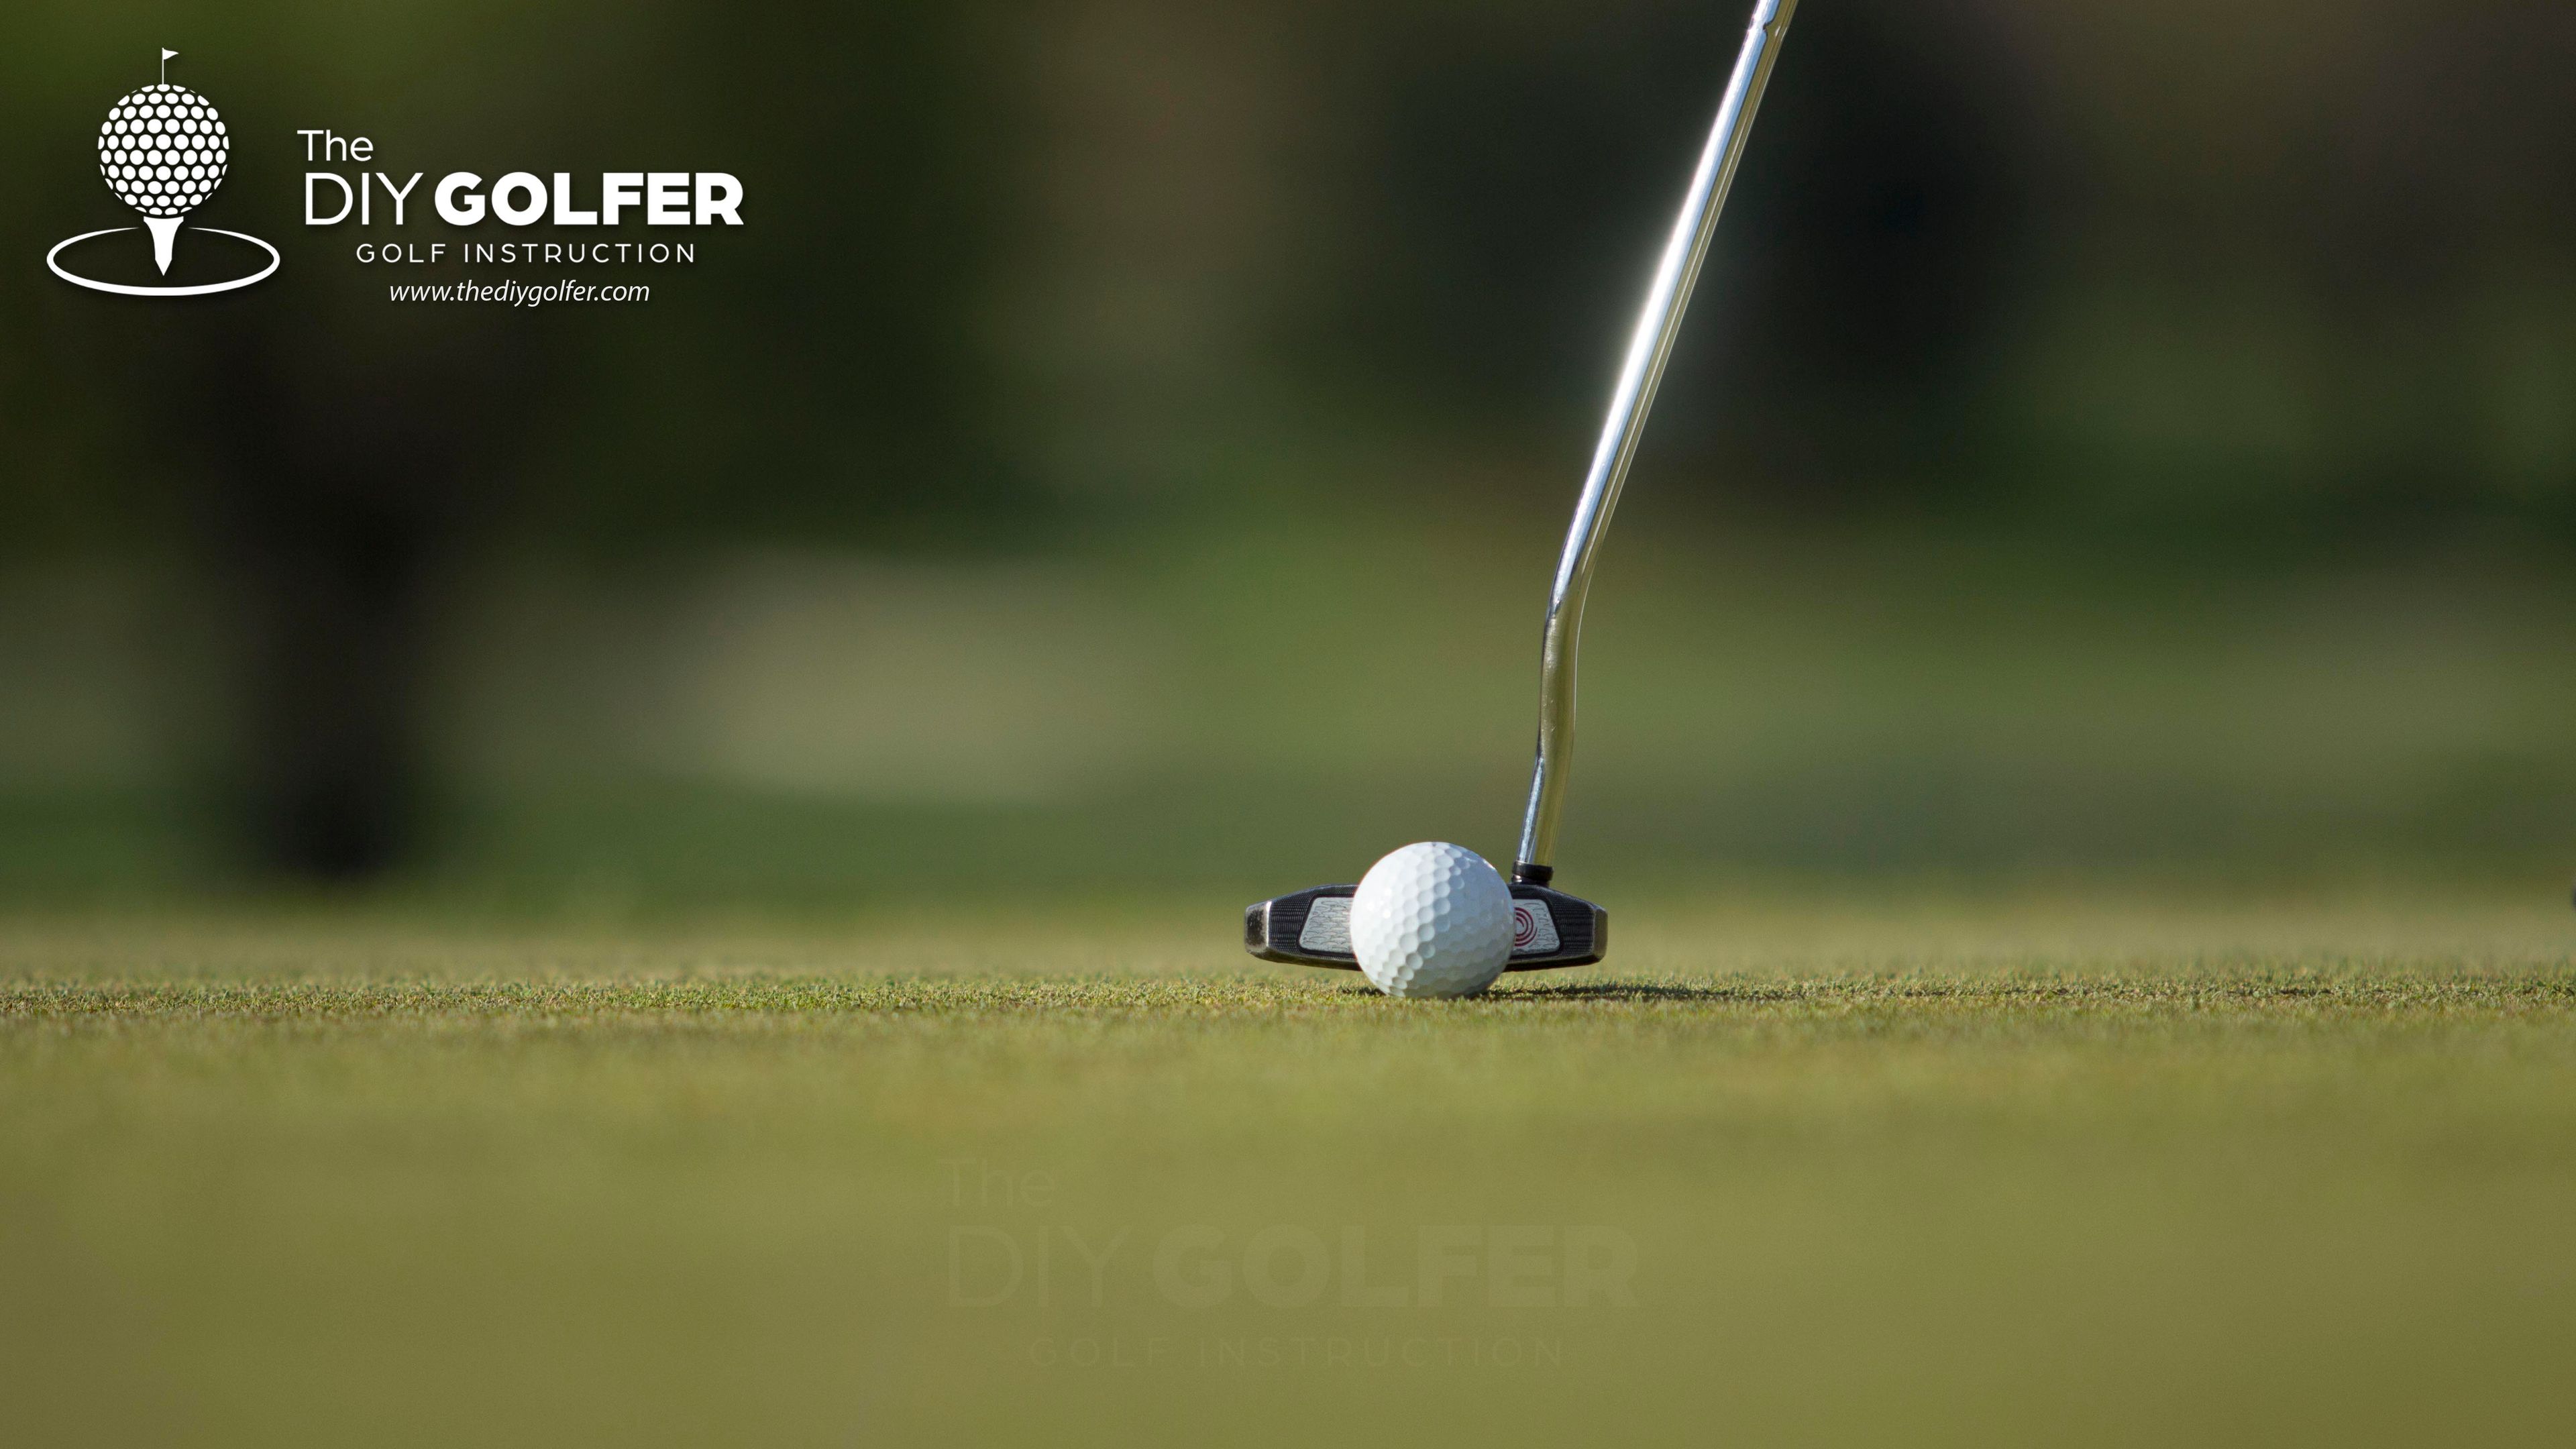 High Definition Golf Putting Photo: At Impact Strike